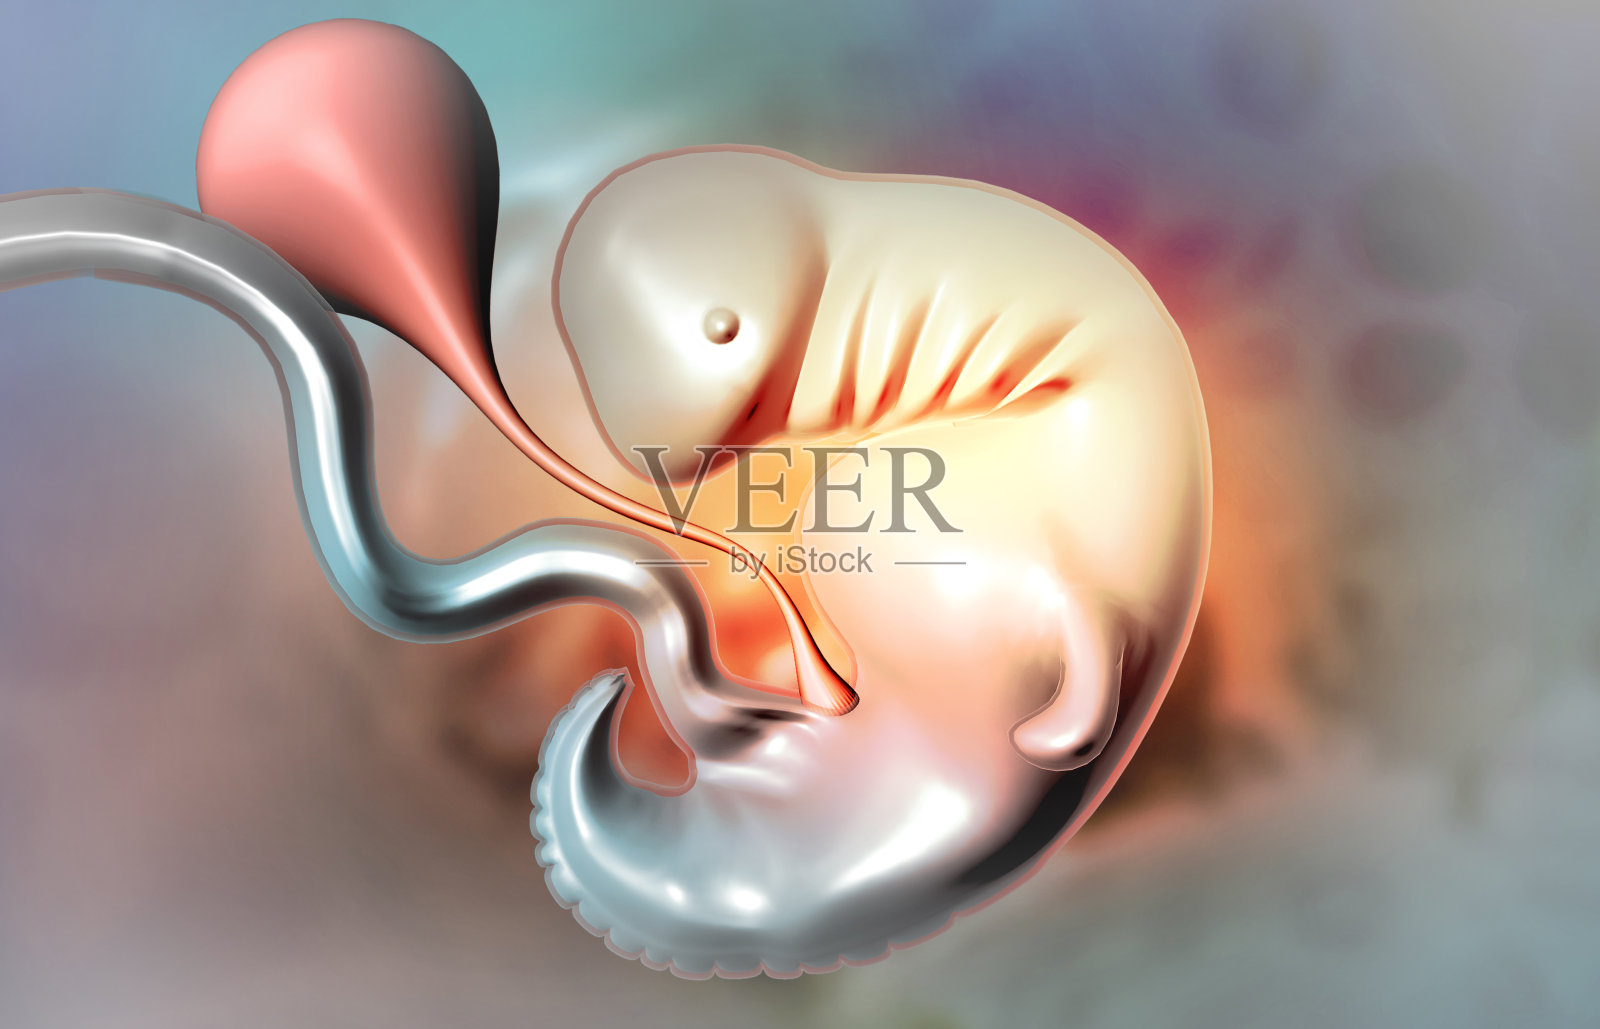 Fetus anatomy on medical background照片摄影图片